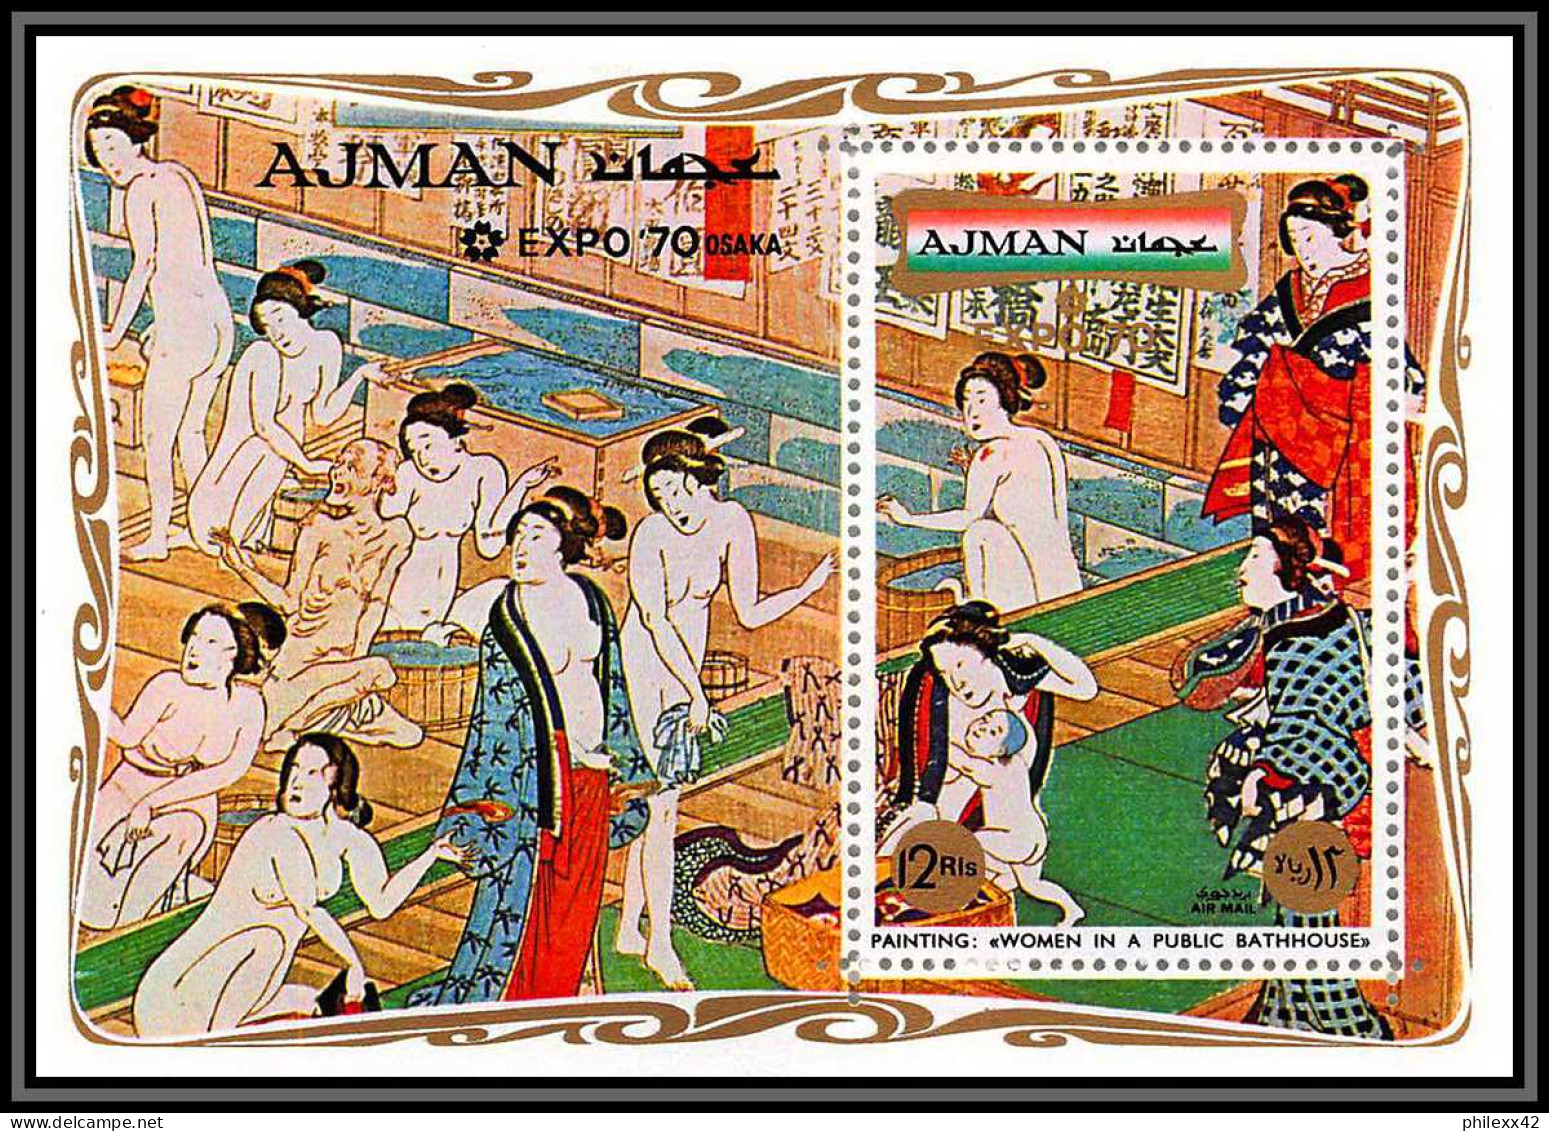 Ajman - 2714/ Bloc N°190 A Expo 70 Japon Japan Exposition Universelle Osake 1970 ** MNH Nus Nudes Tableau (Painting) - 1970 – Osaka (Japan)